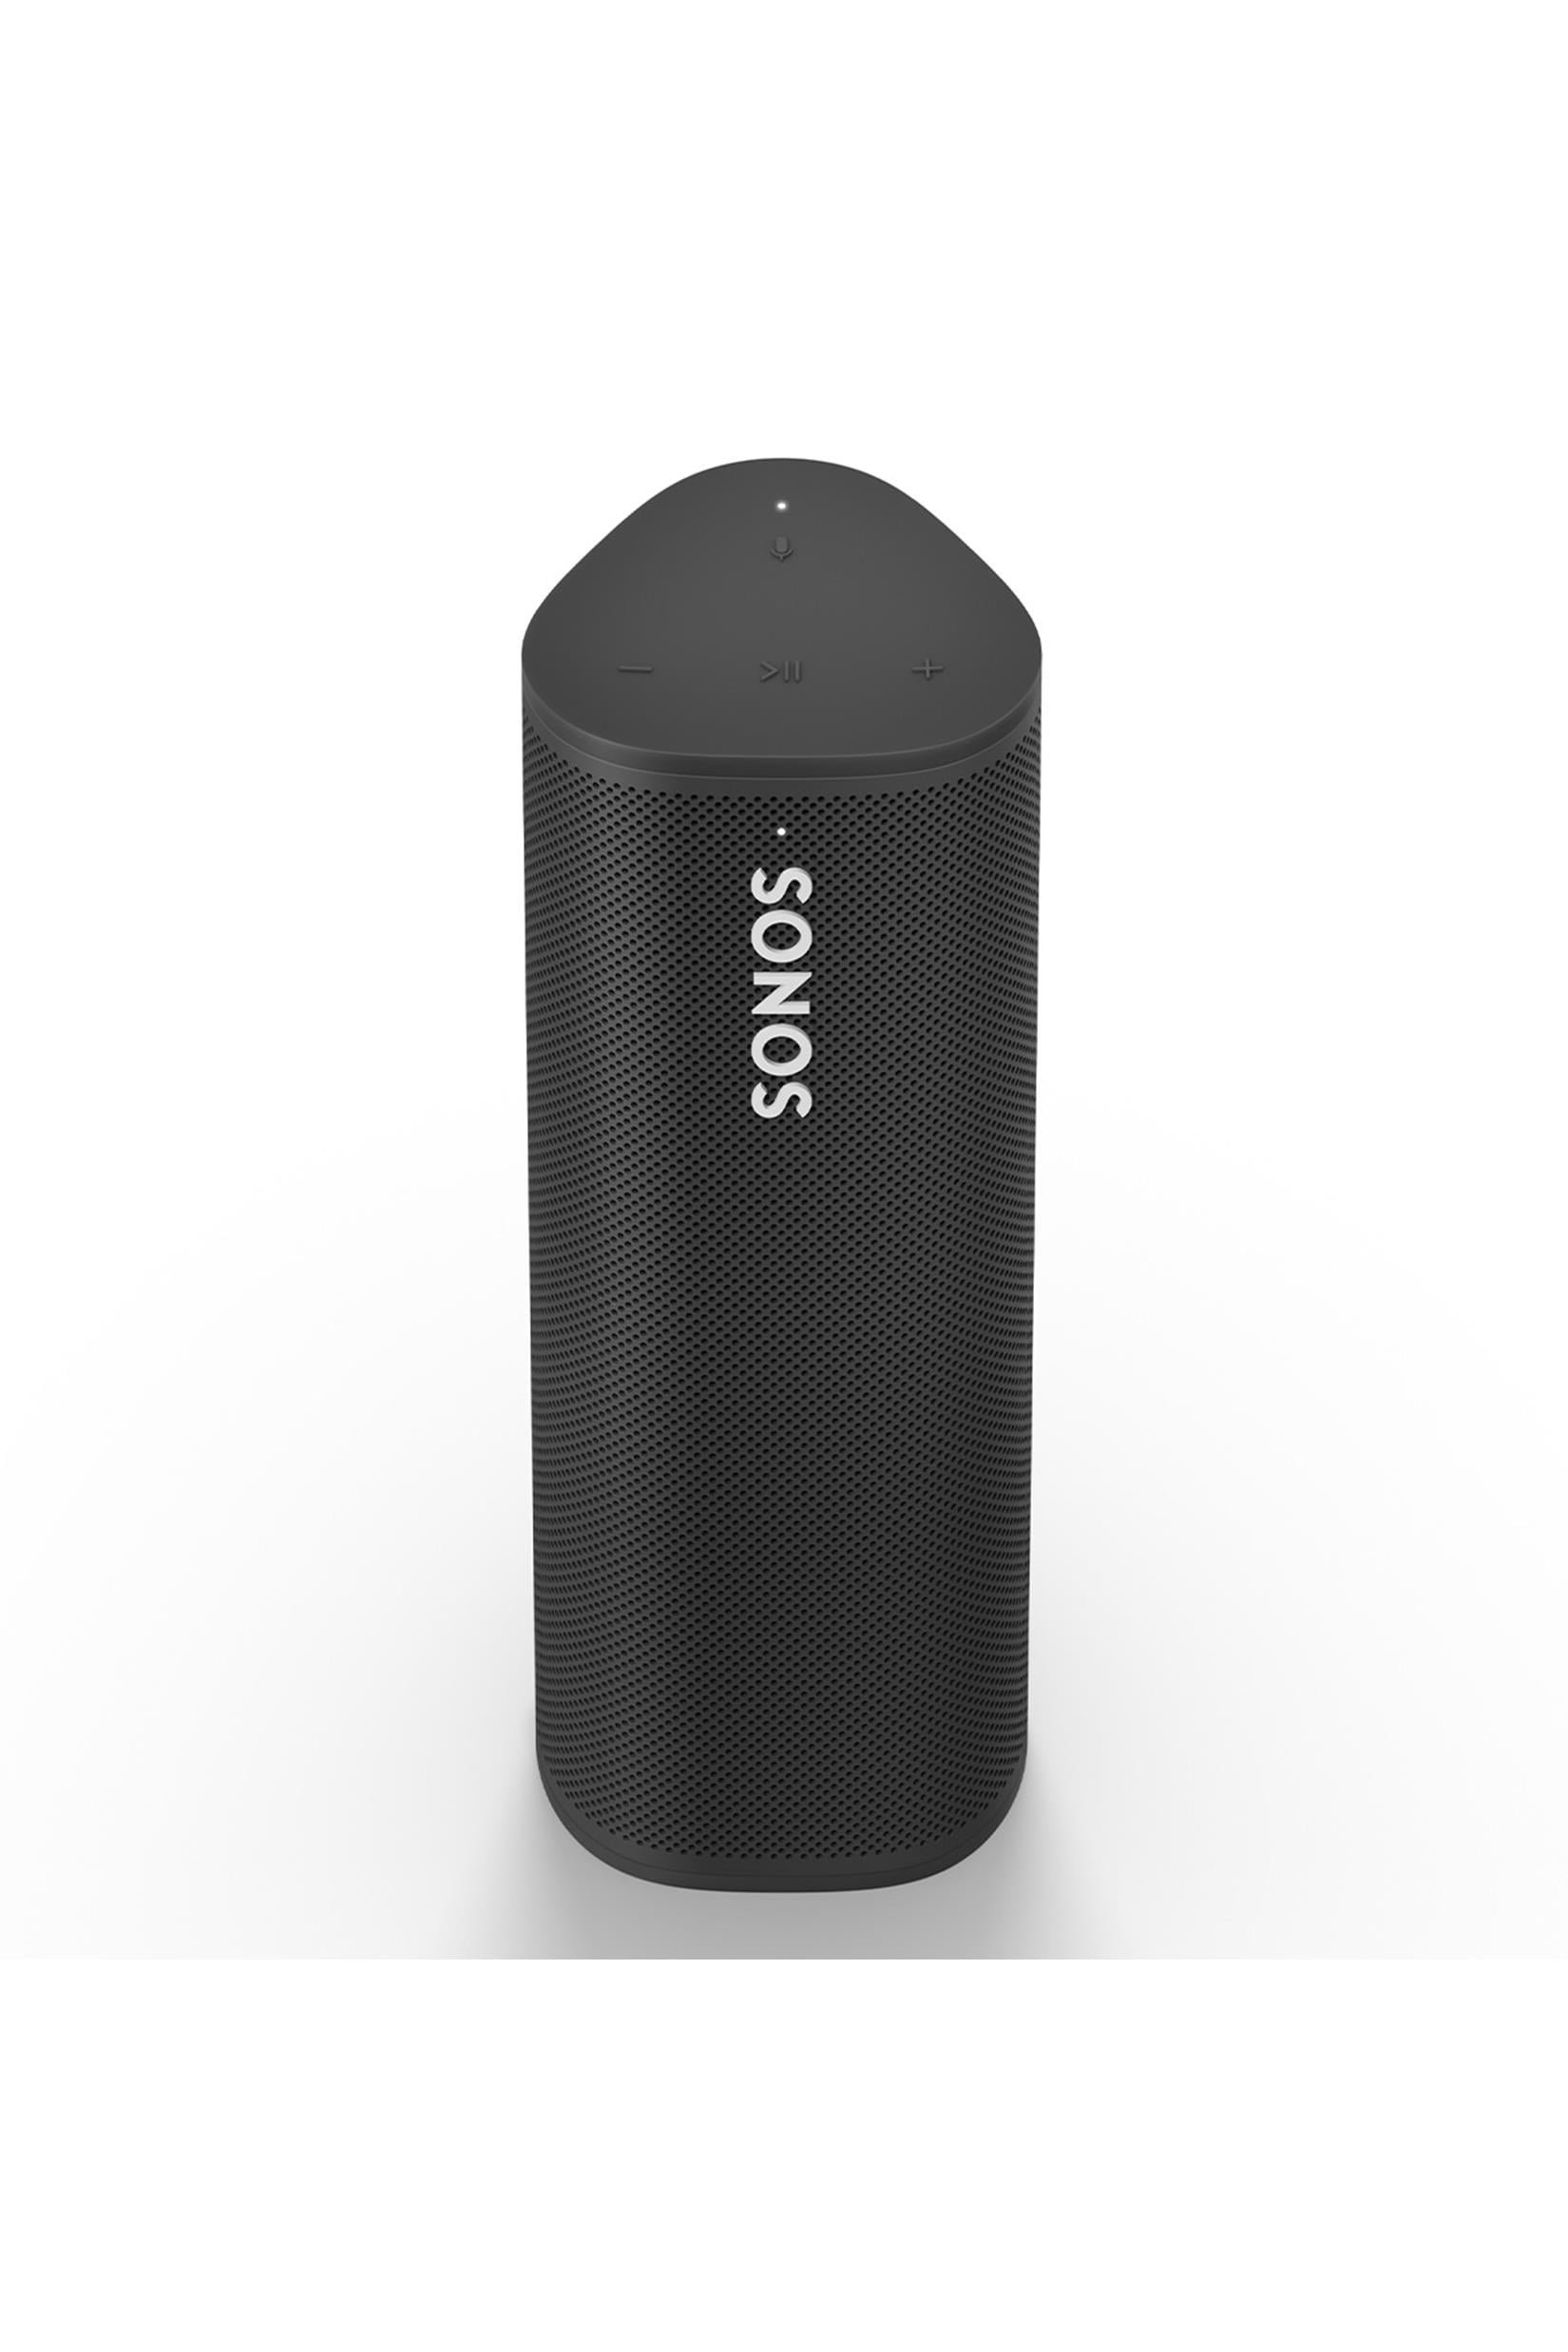 Sonos Roam - Smart speaker - for portable use - Wi-Fi, App-controlled - 2-way - shadow black Walmart.com